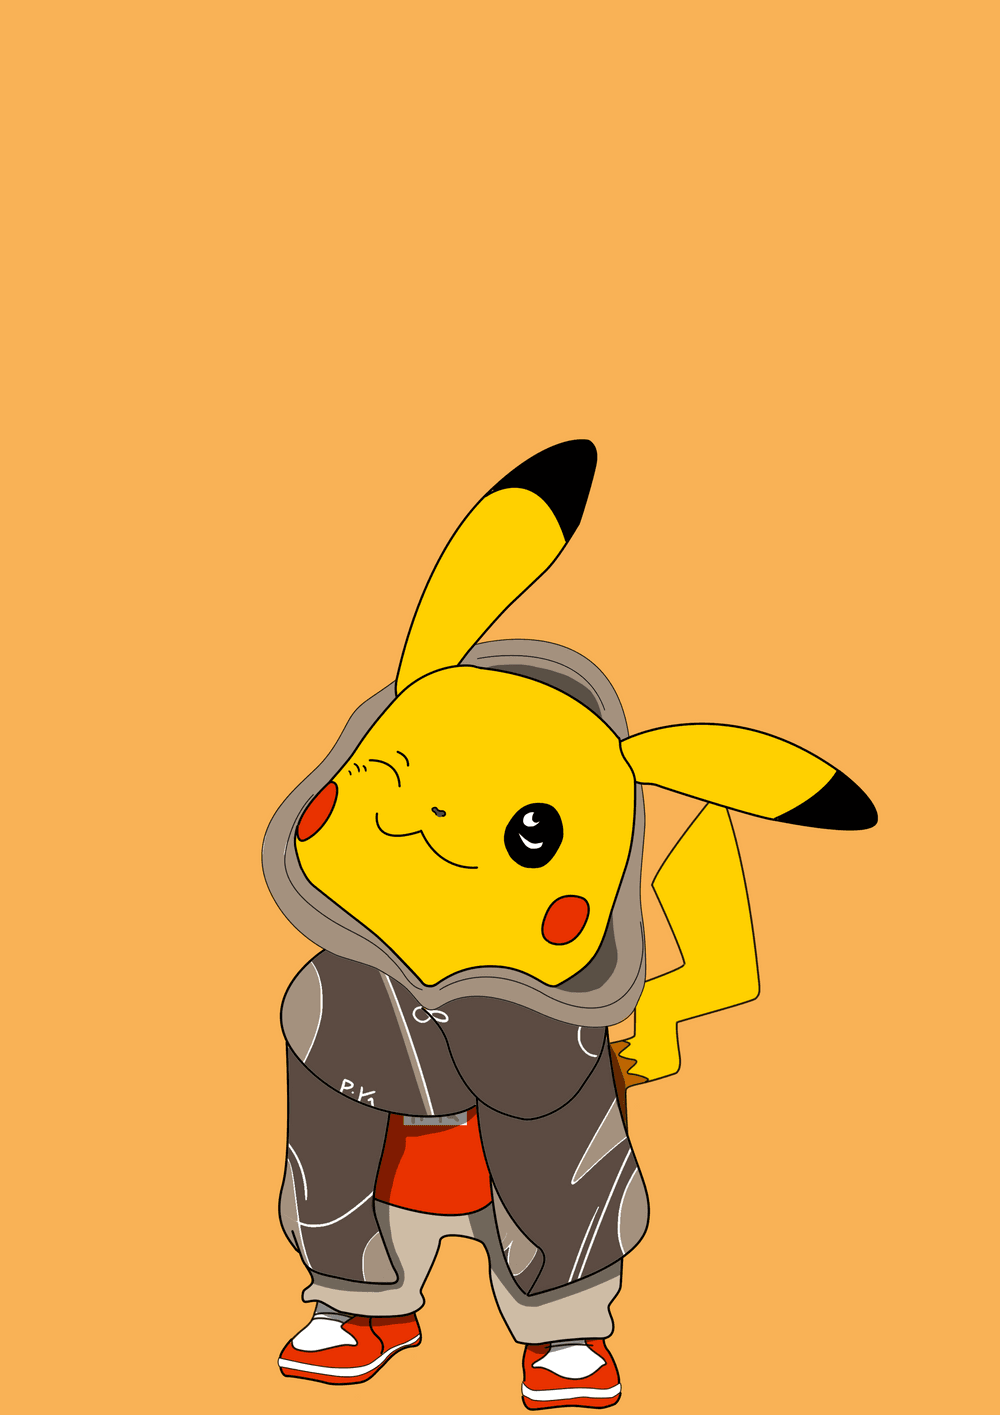 Diez Salida Costoso Pikachu - Pokémon #0003 - PokeWorld Collection | OpenSea